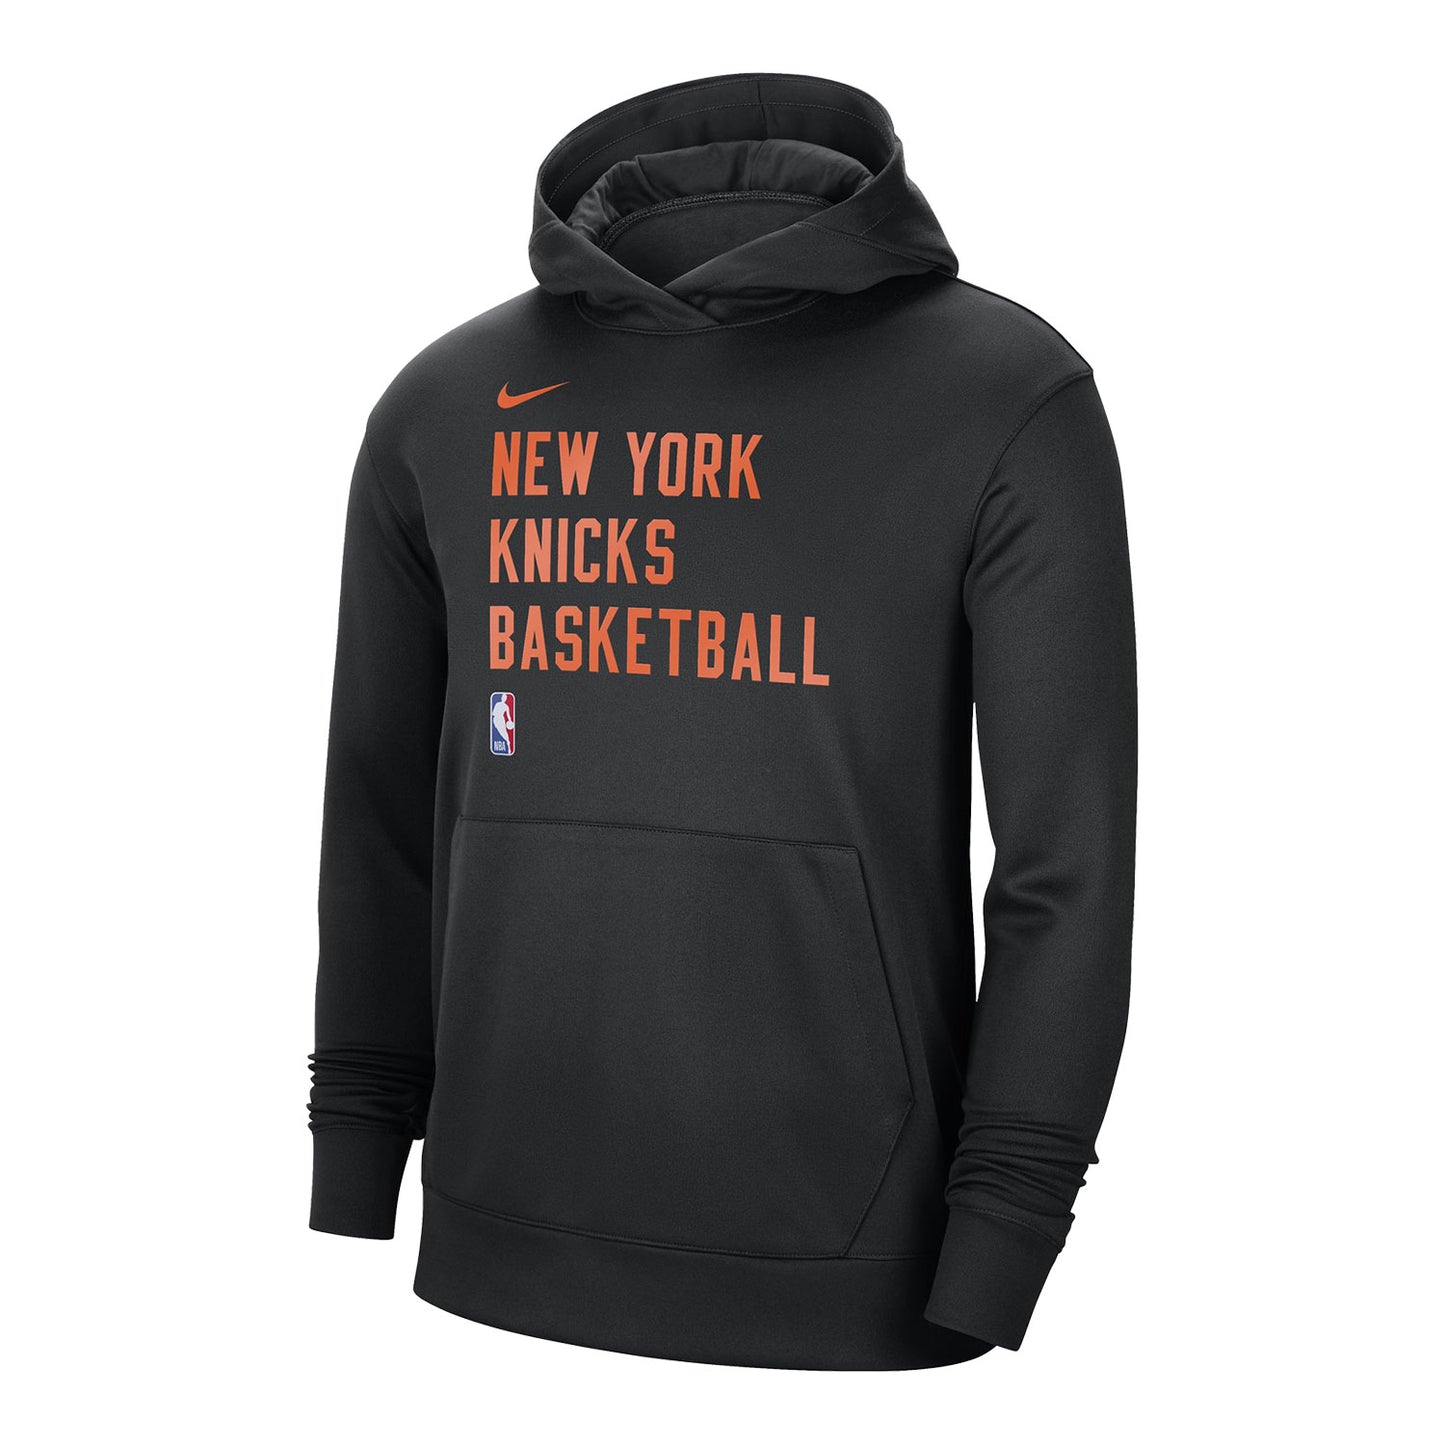 Unisex Gray Medium Official NBA NY Knicks Pullover Hooded Sweatshirt Hoodie